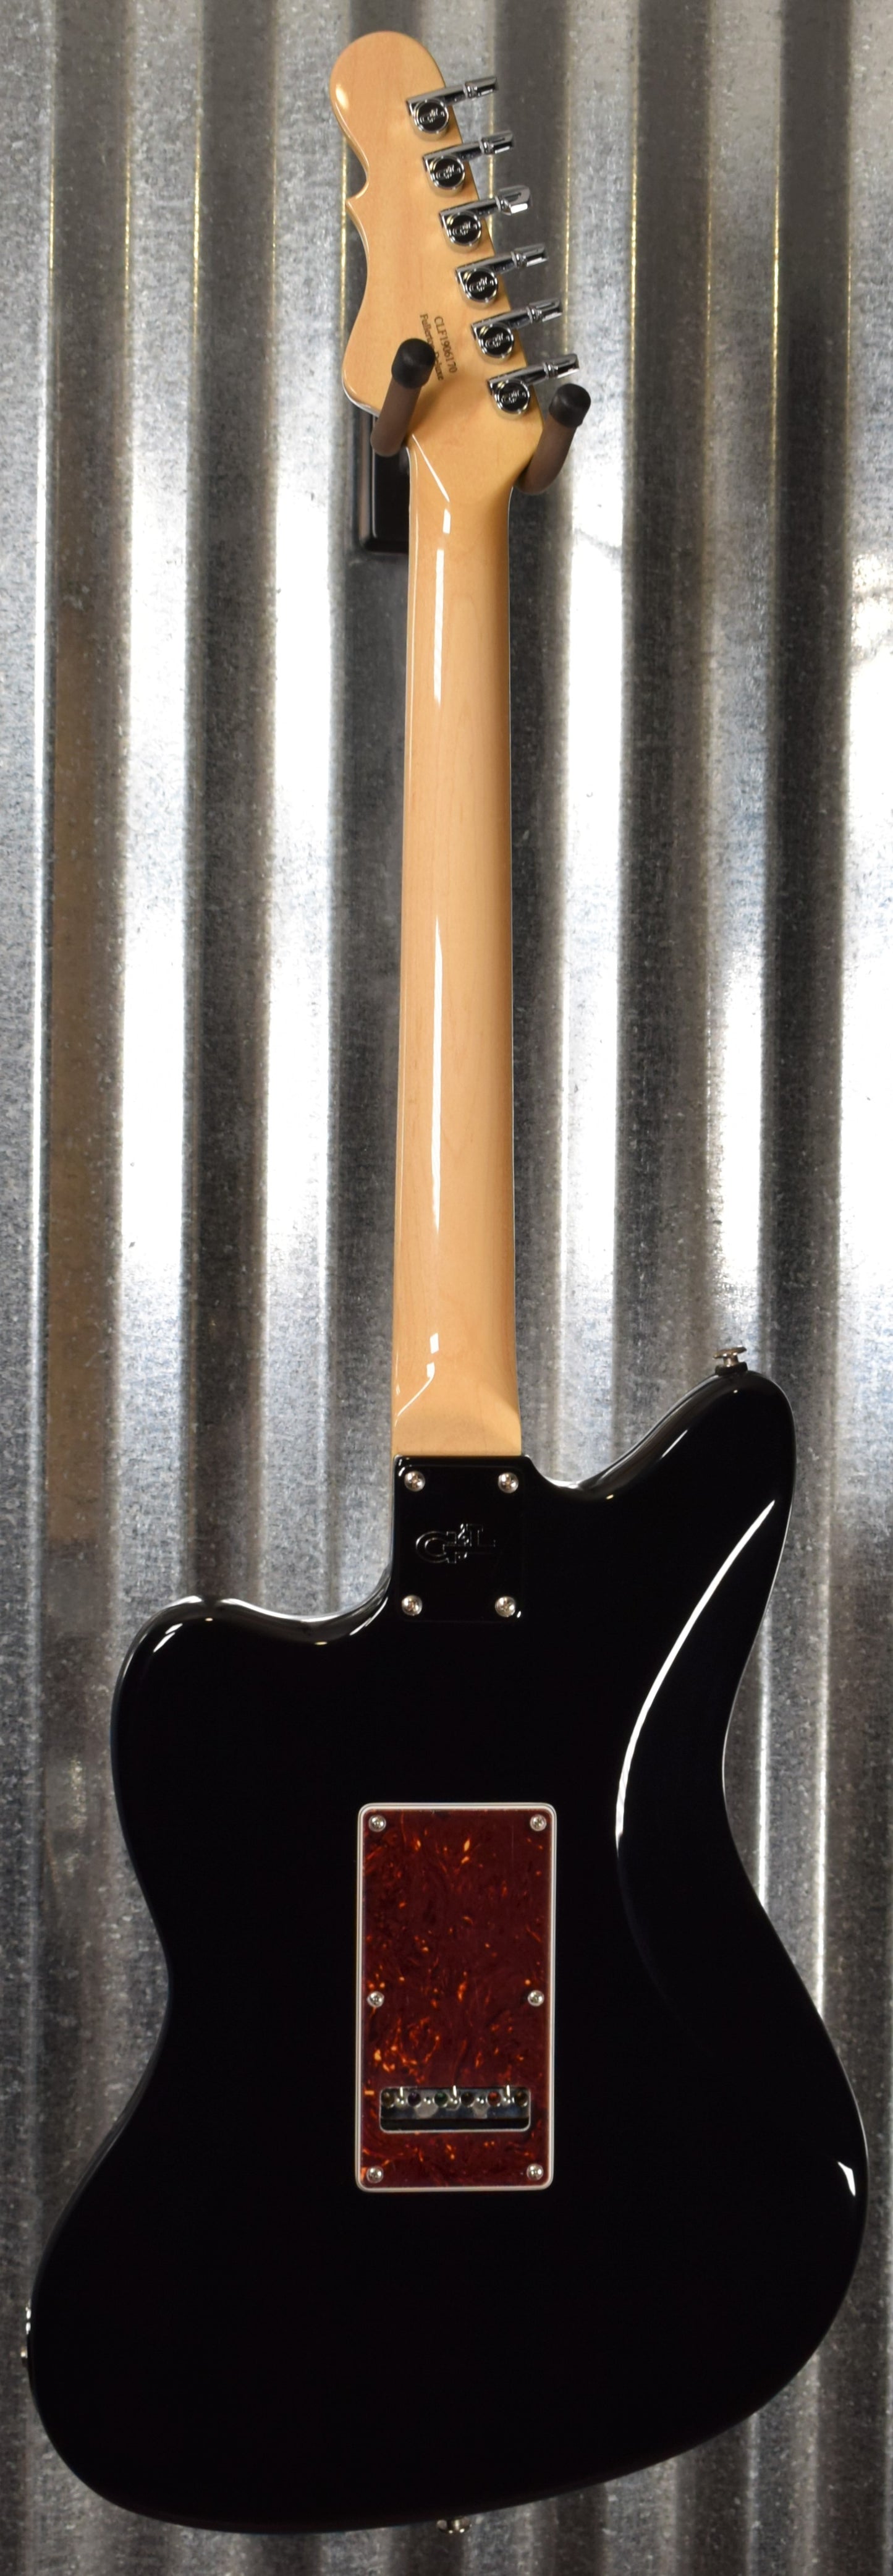 G&L USA Fullerton Deluxe Doheny HH Jet Black Guitar & Case #6170